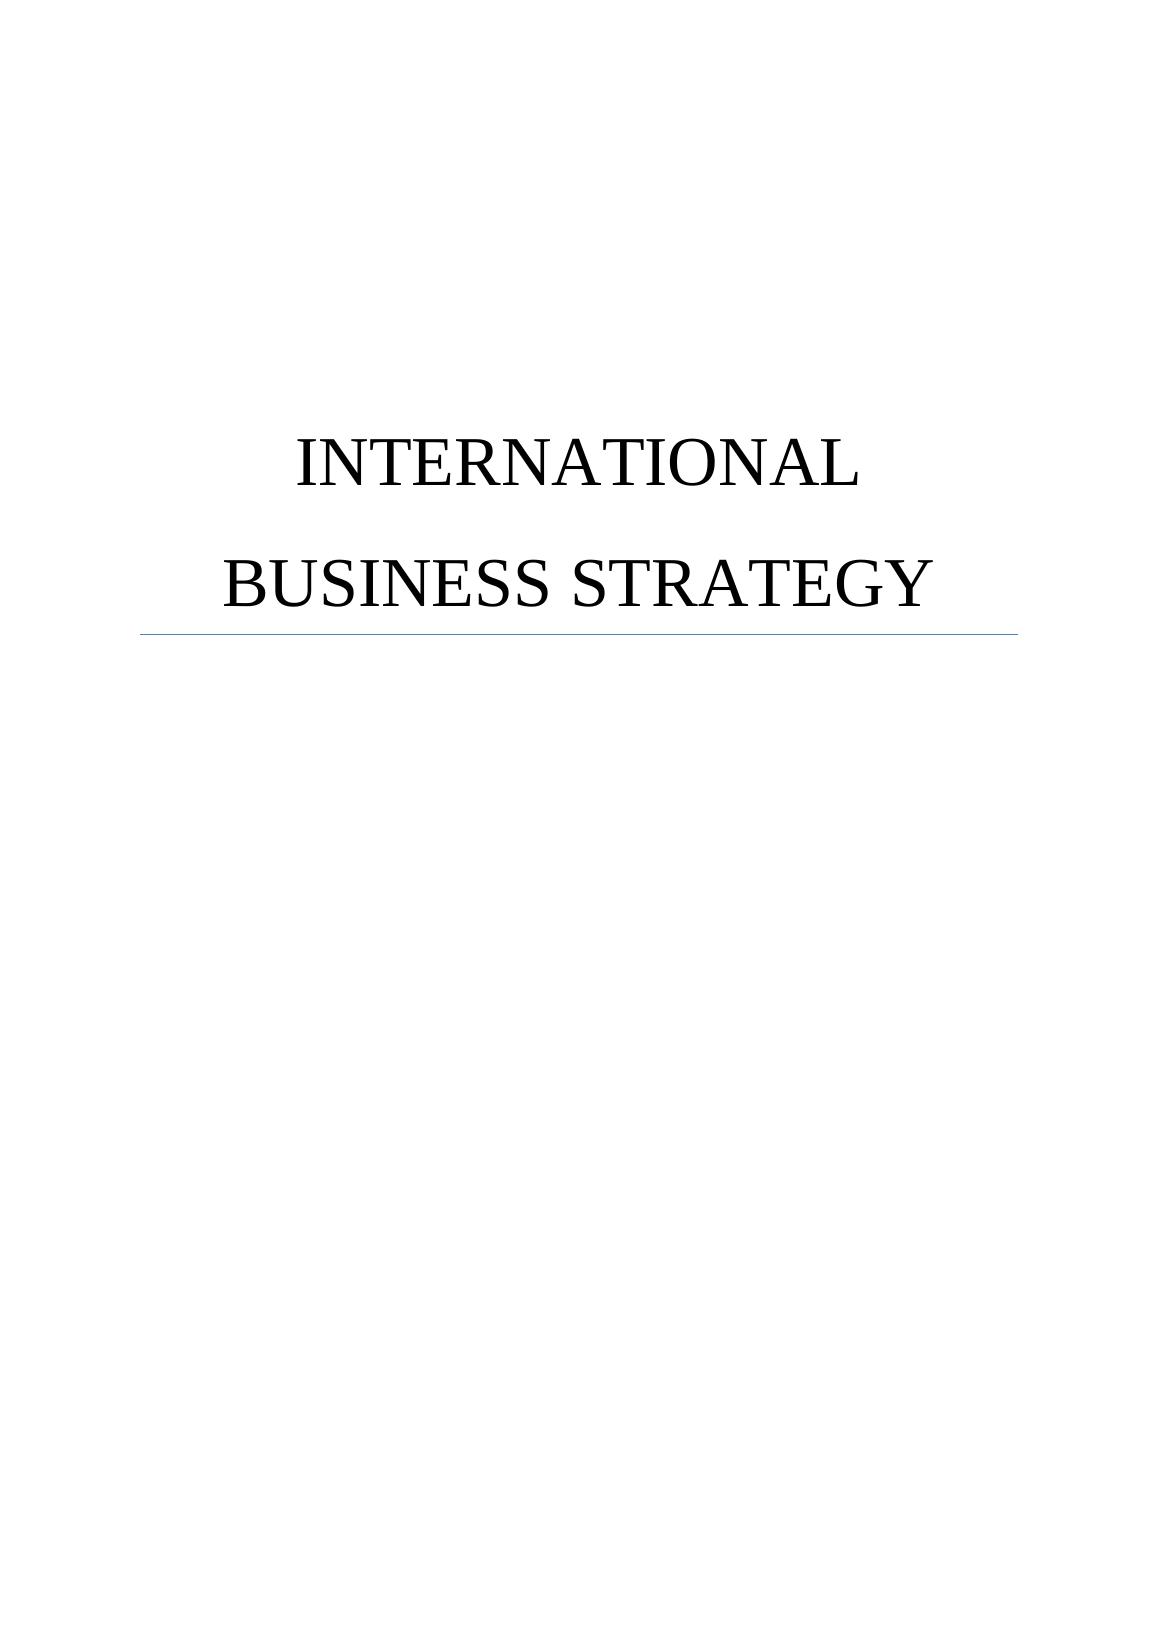 International Business Strategy_1